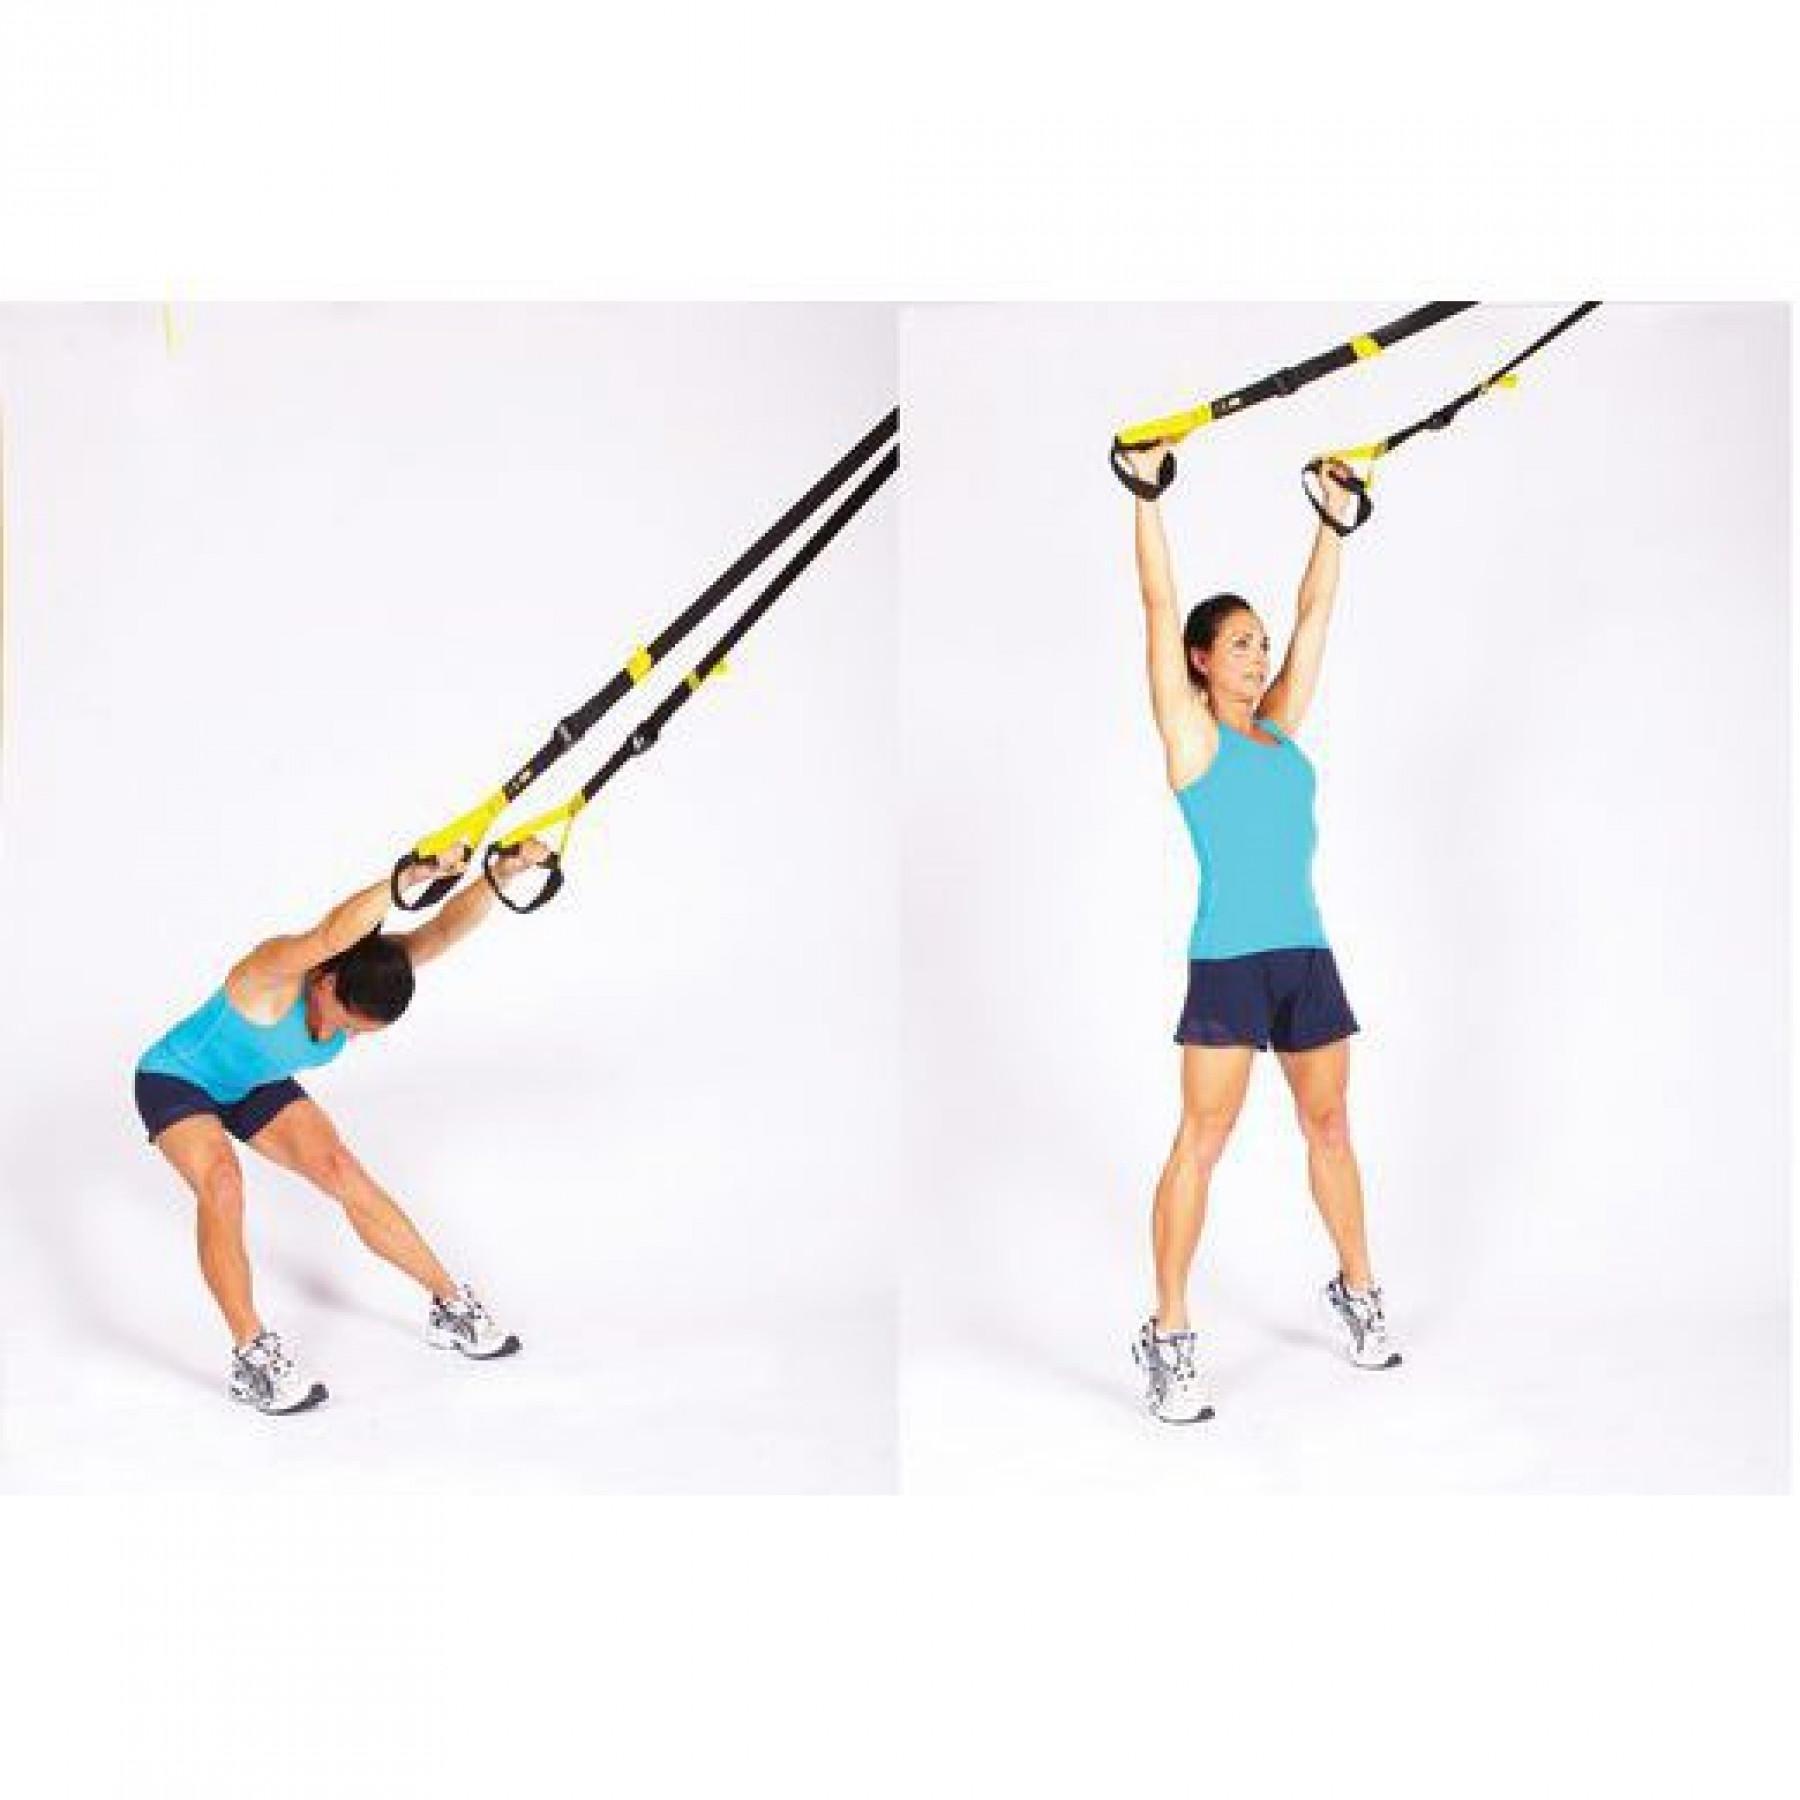 Bodybuilding sling - ophanging - spierversterking PowerShot